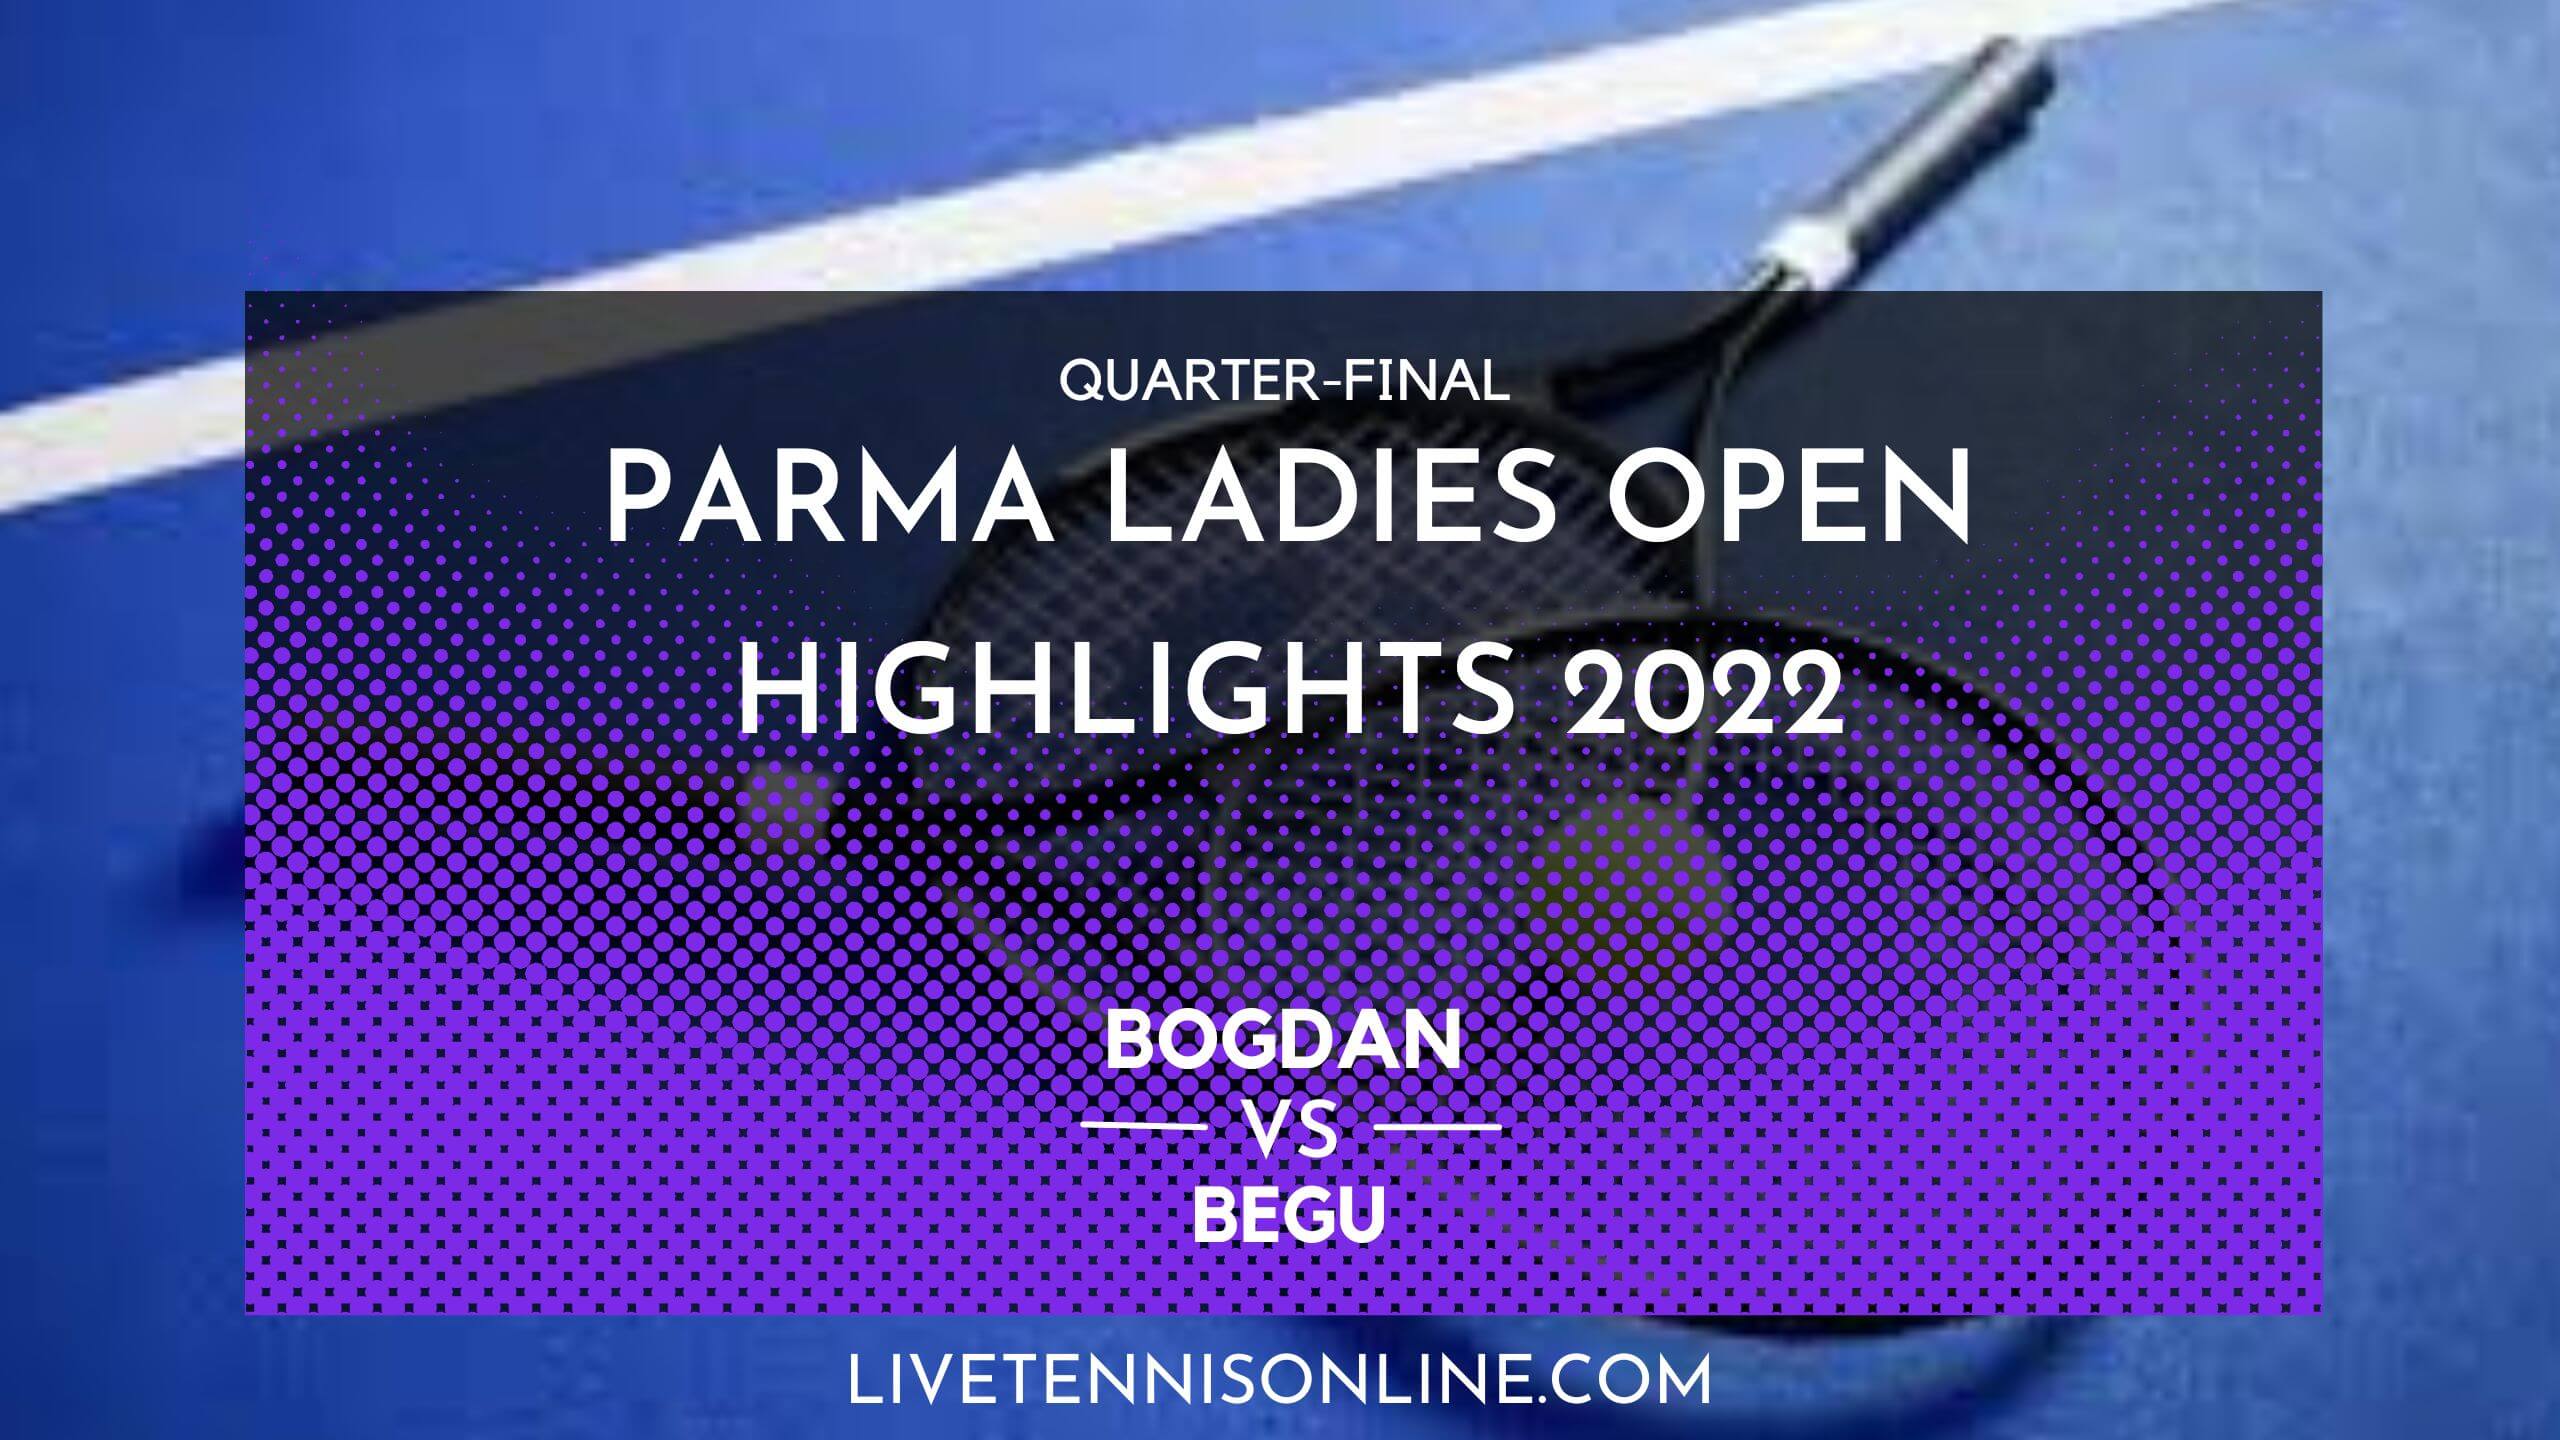 Bogdan Vs Begu QF Highlights 2022 Parma Ladies Open